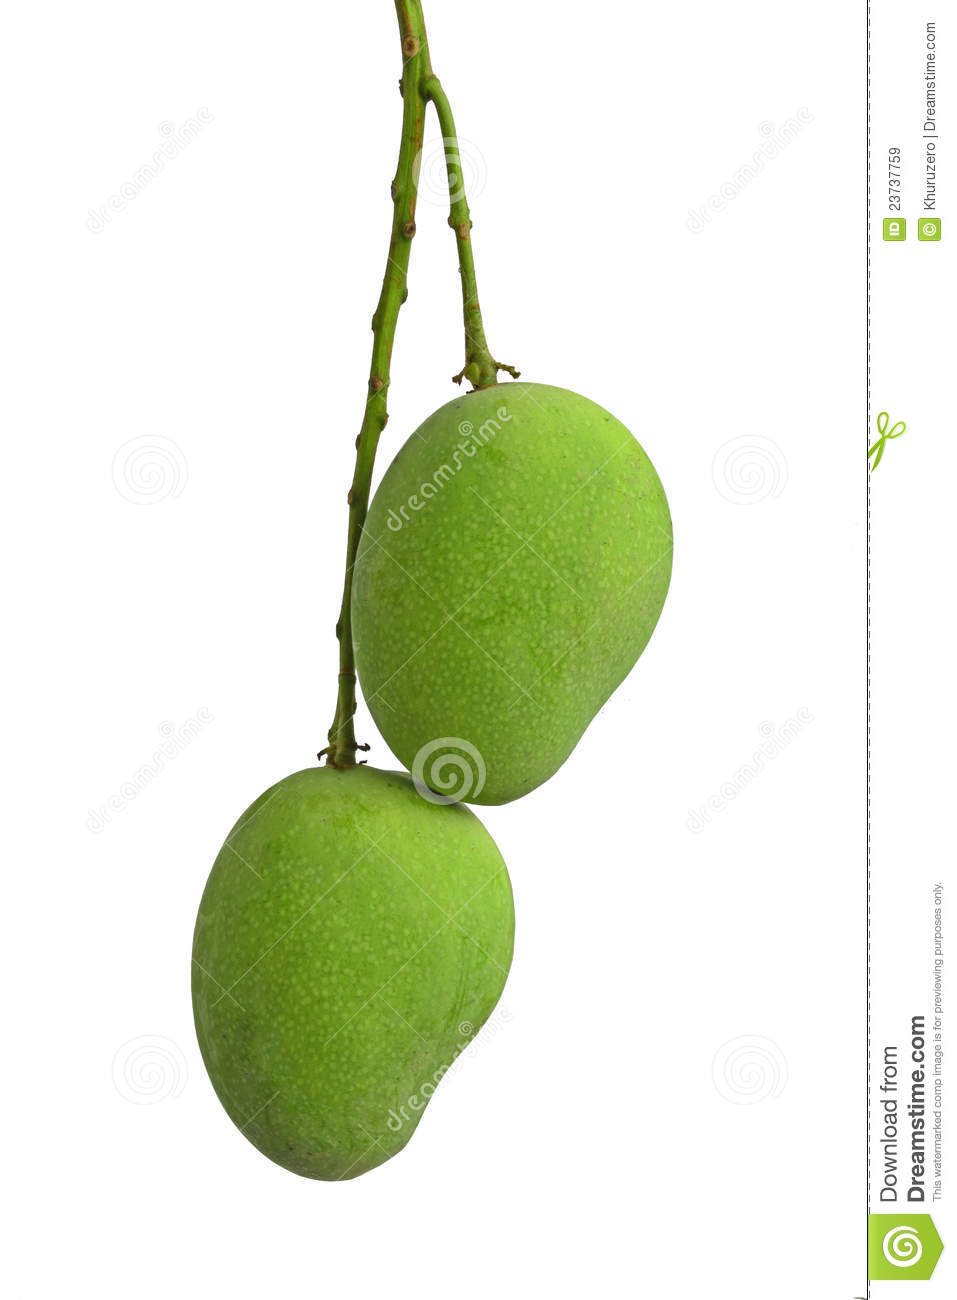 Green Mango Royalty Free Stock Images.